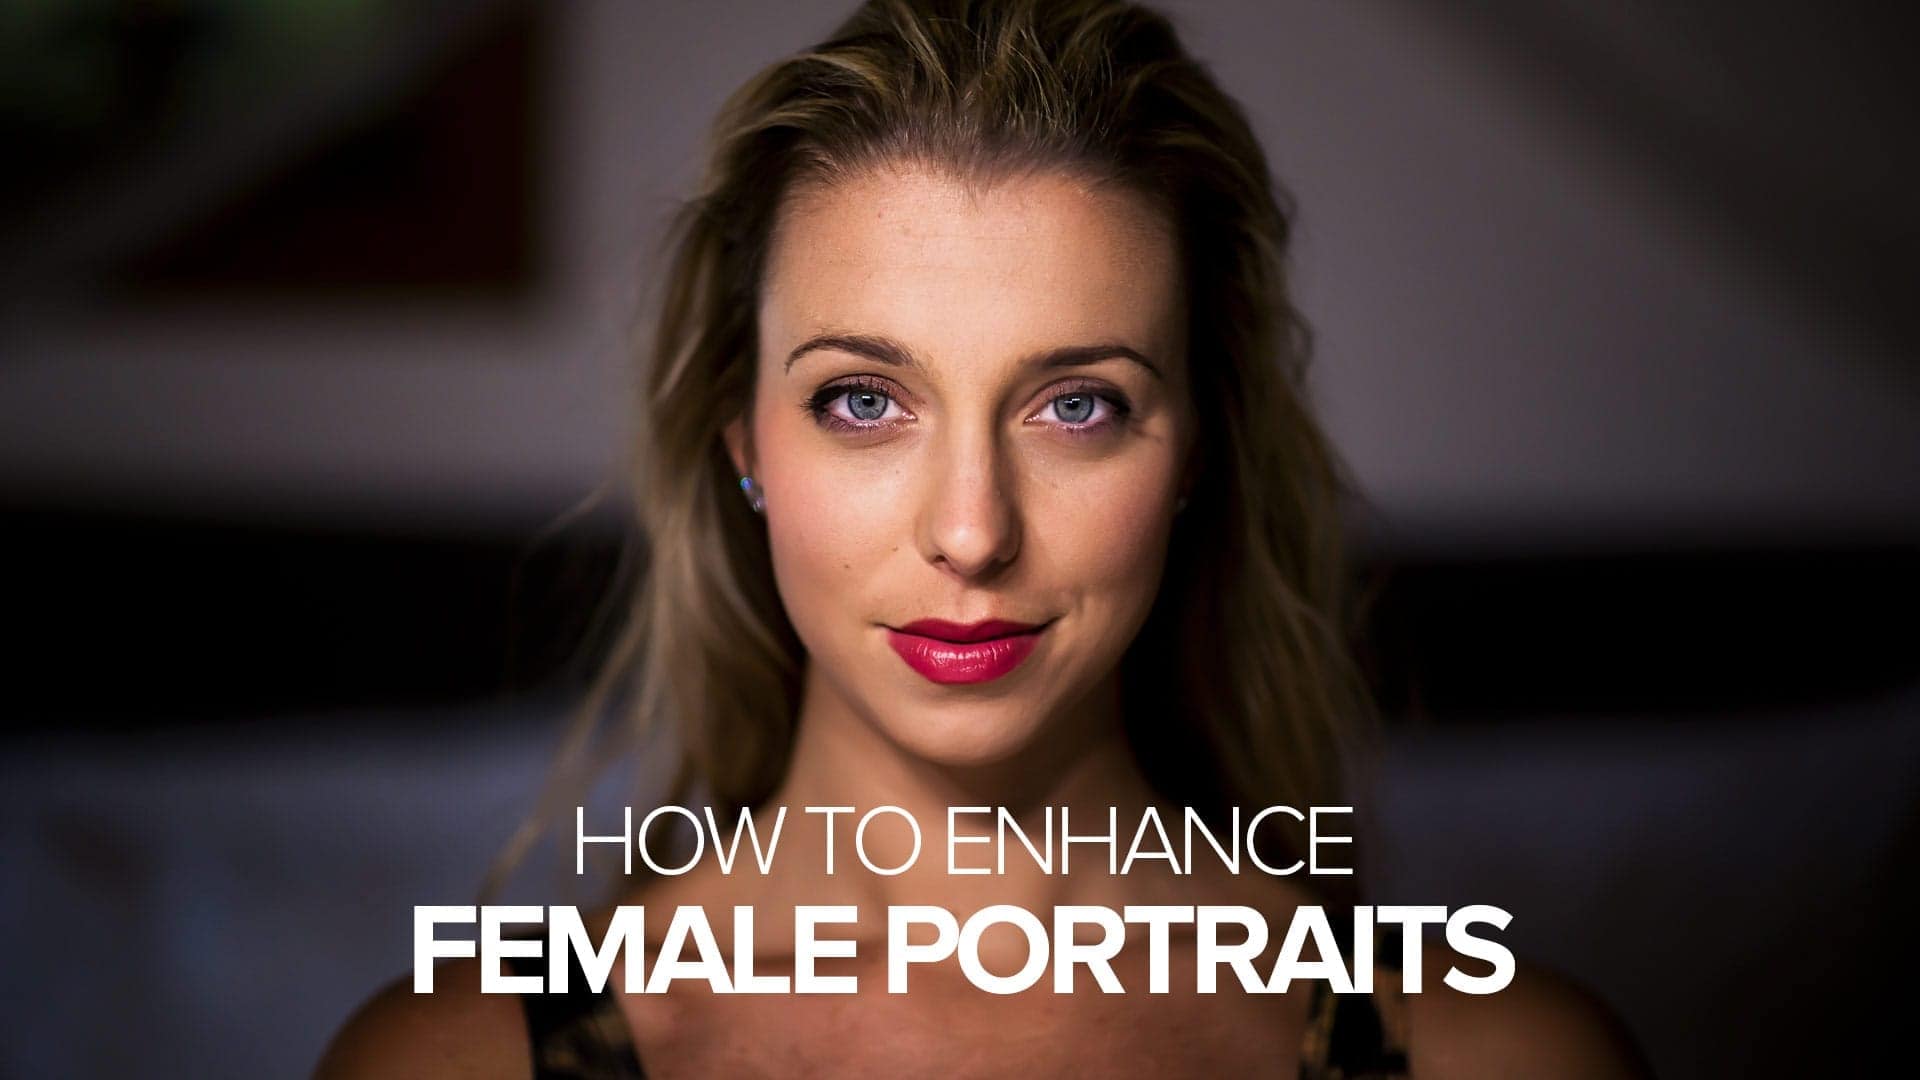 How to Enhance a Female Portrait